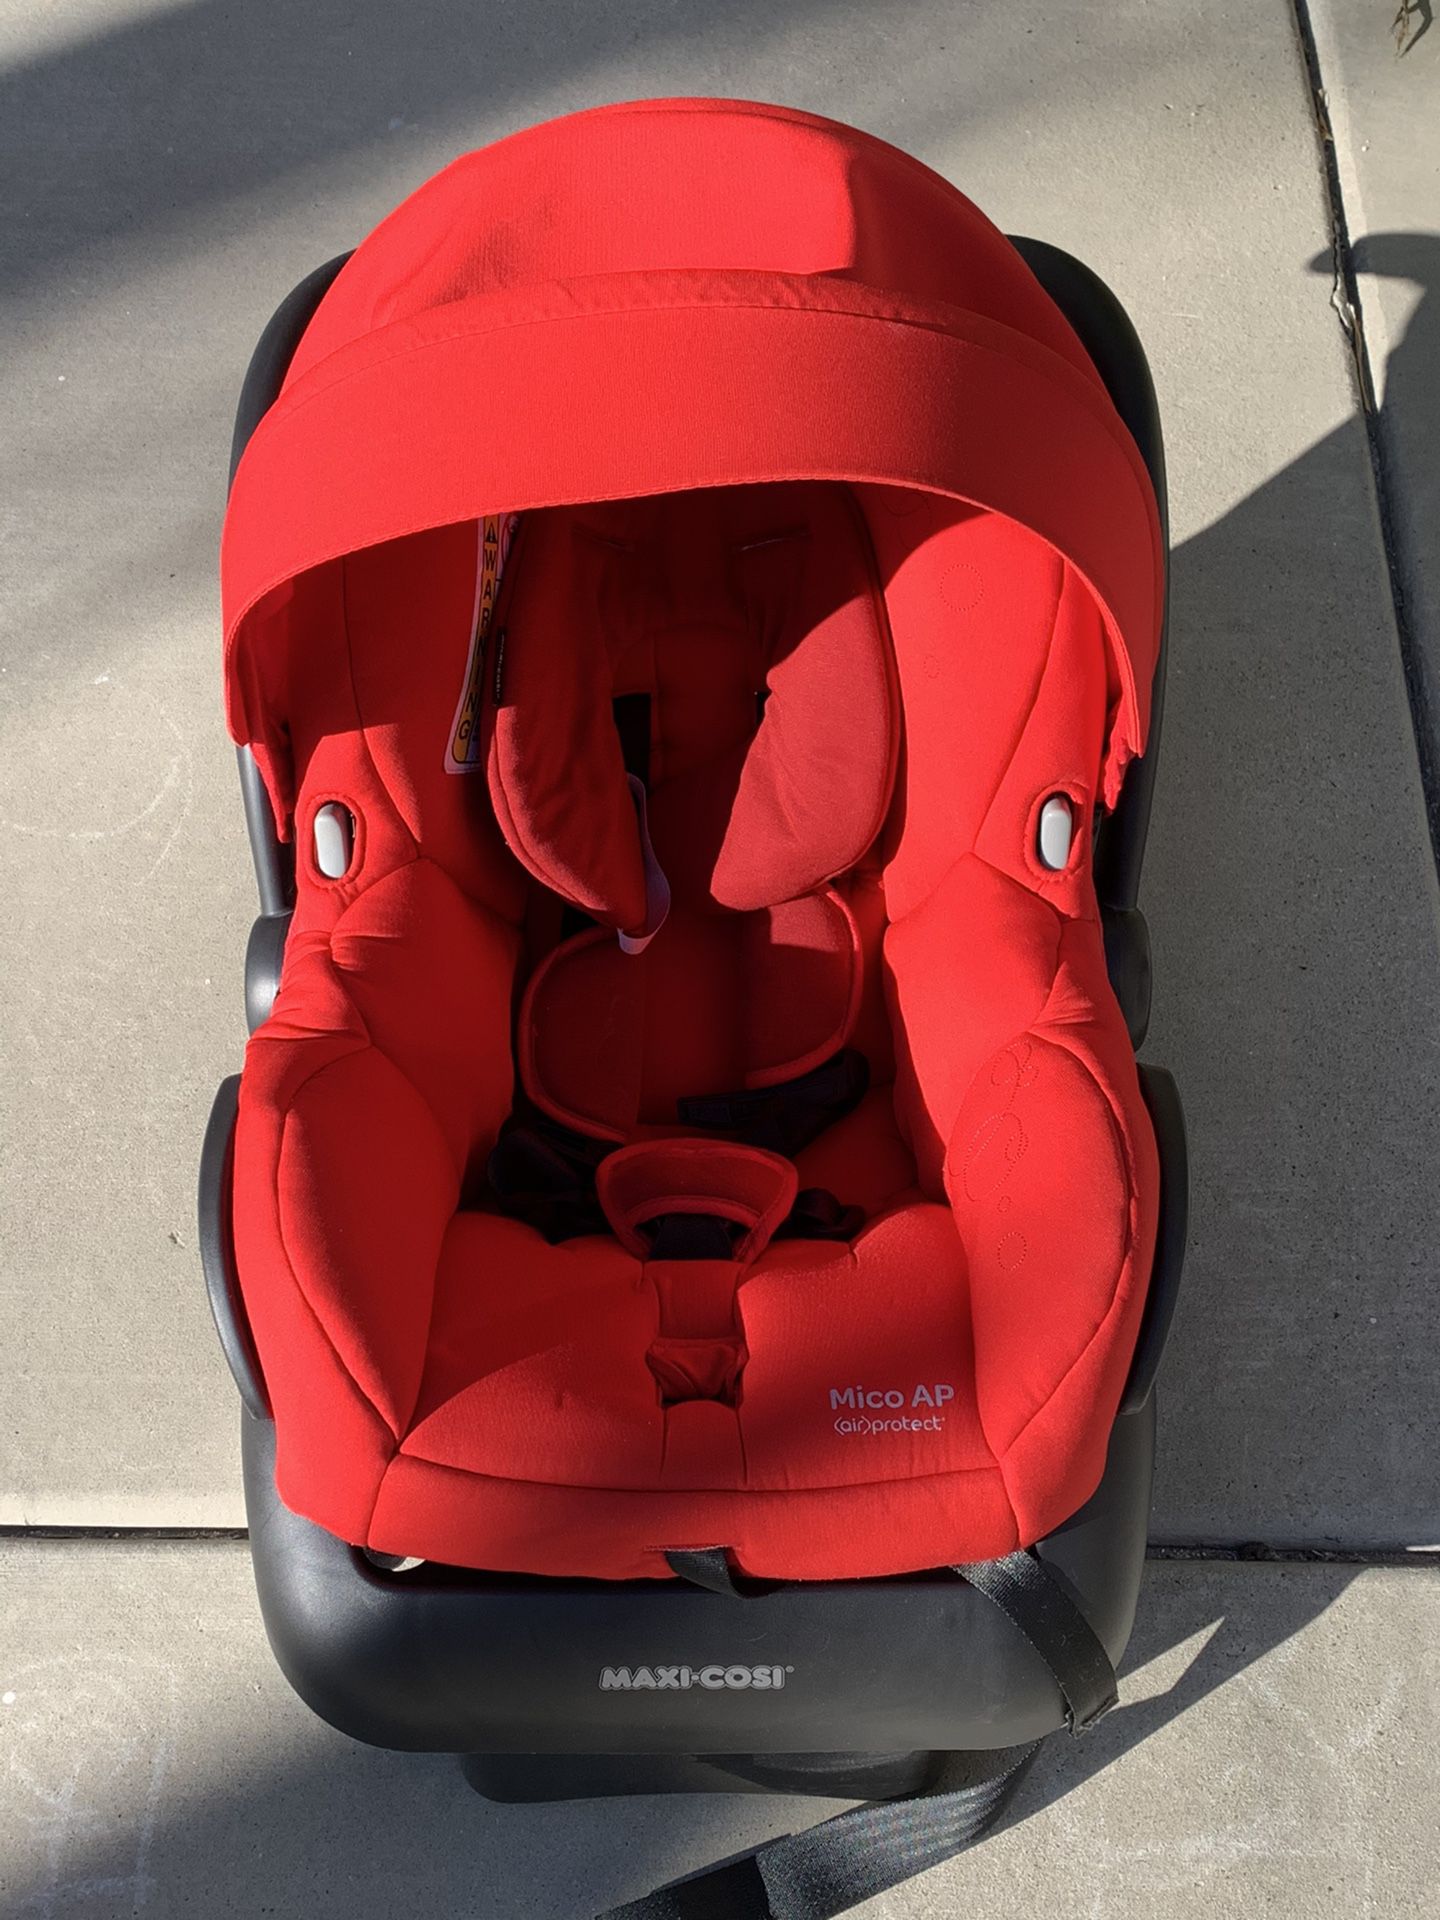 Maxi Cosi Mico AP Infant Car Seat